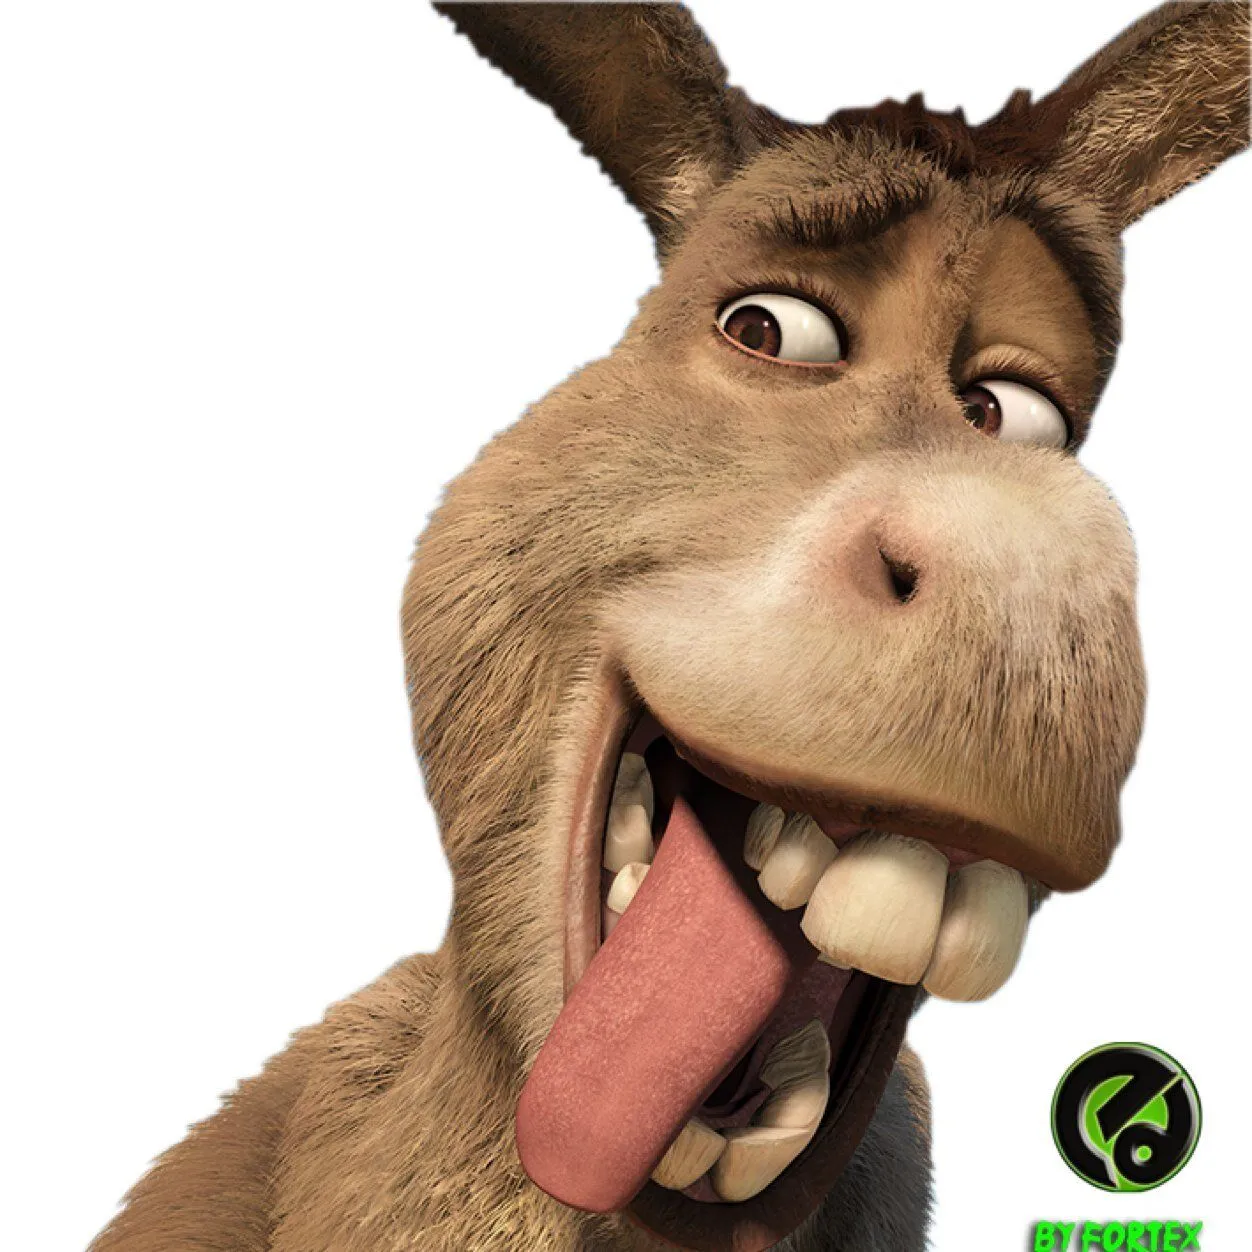 El burro de shrek (@1Elburro) | Twitter